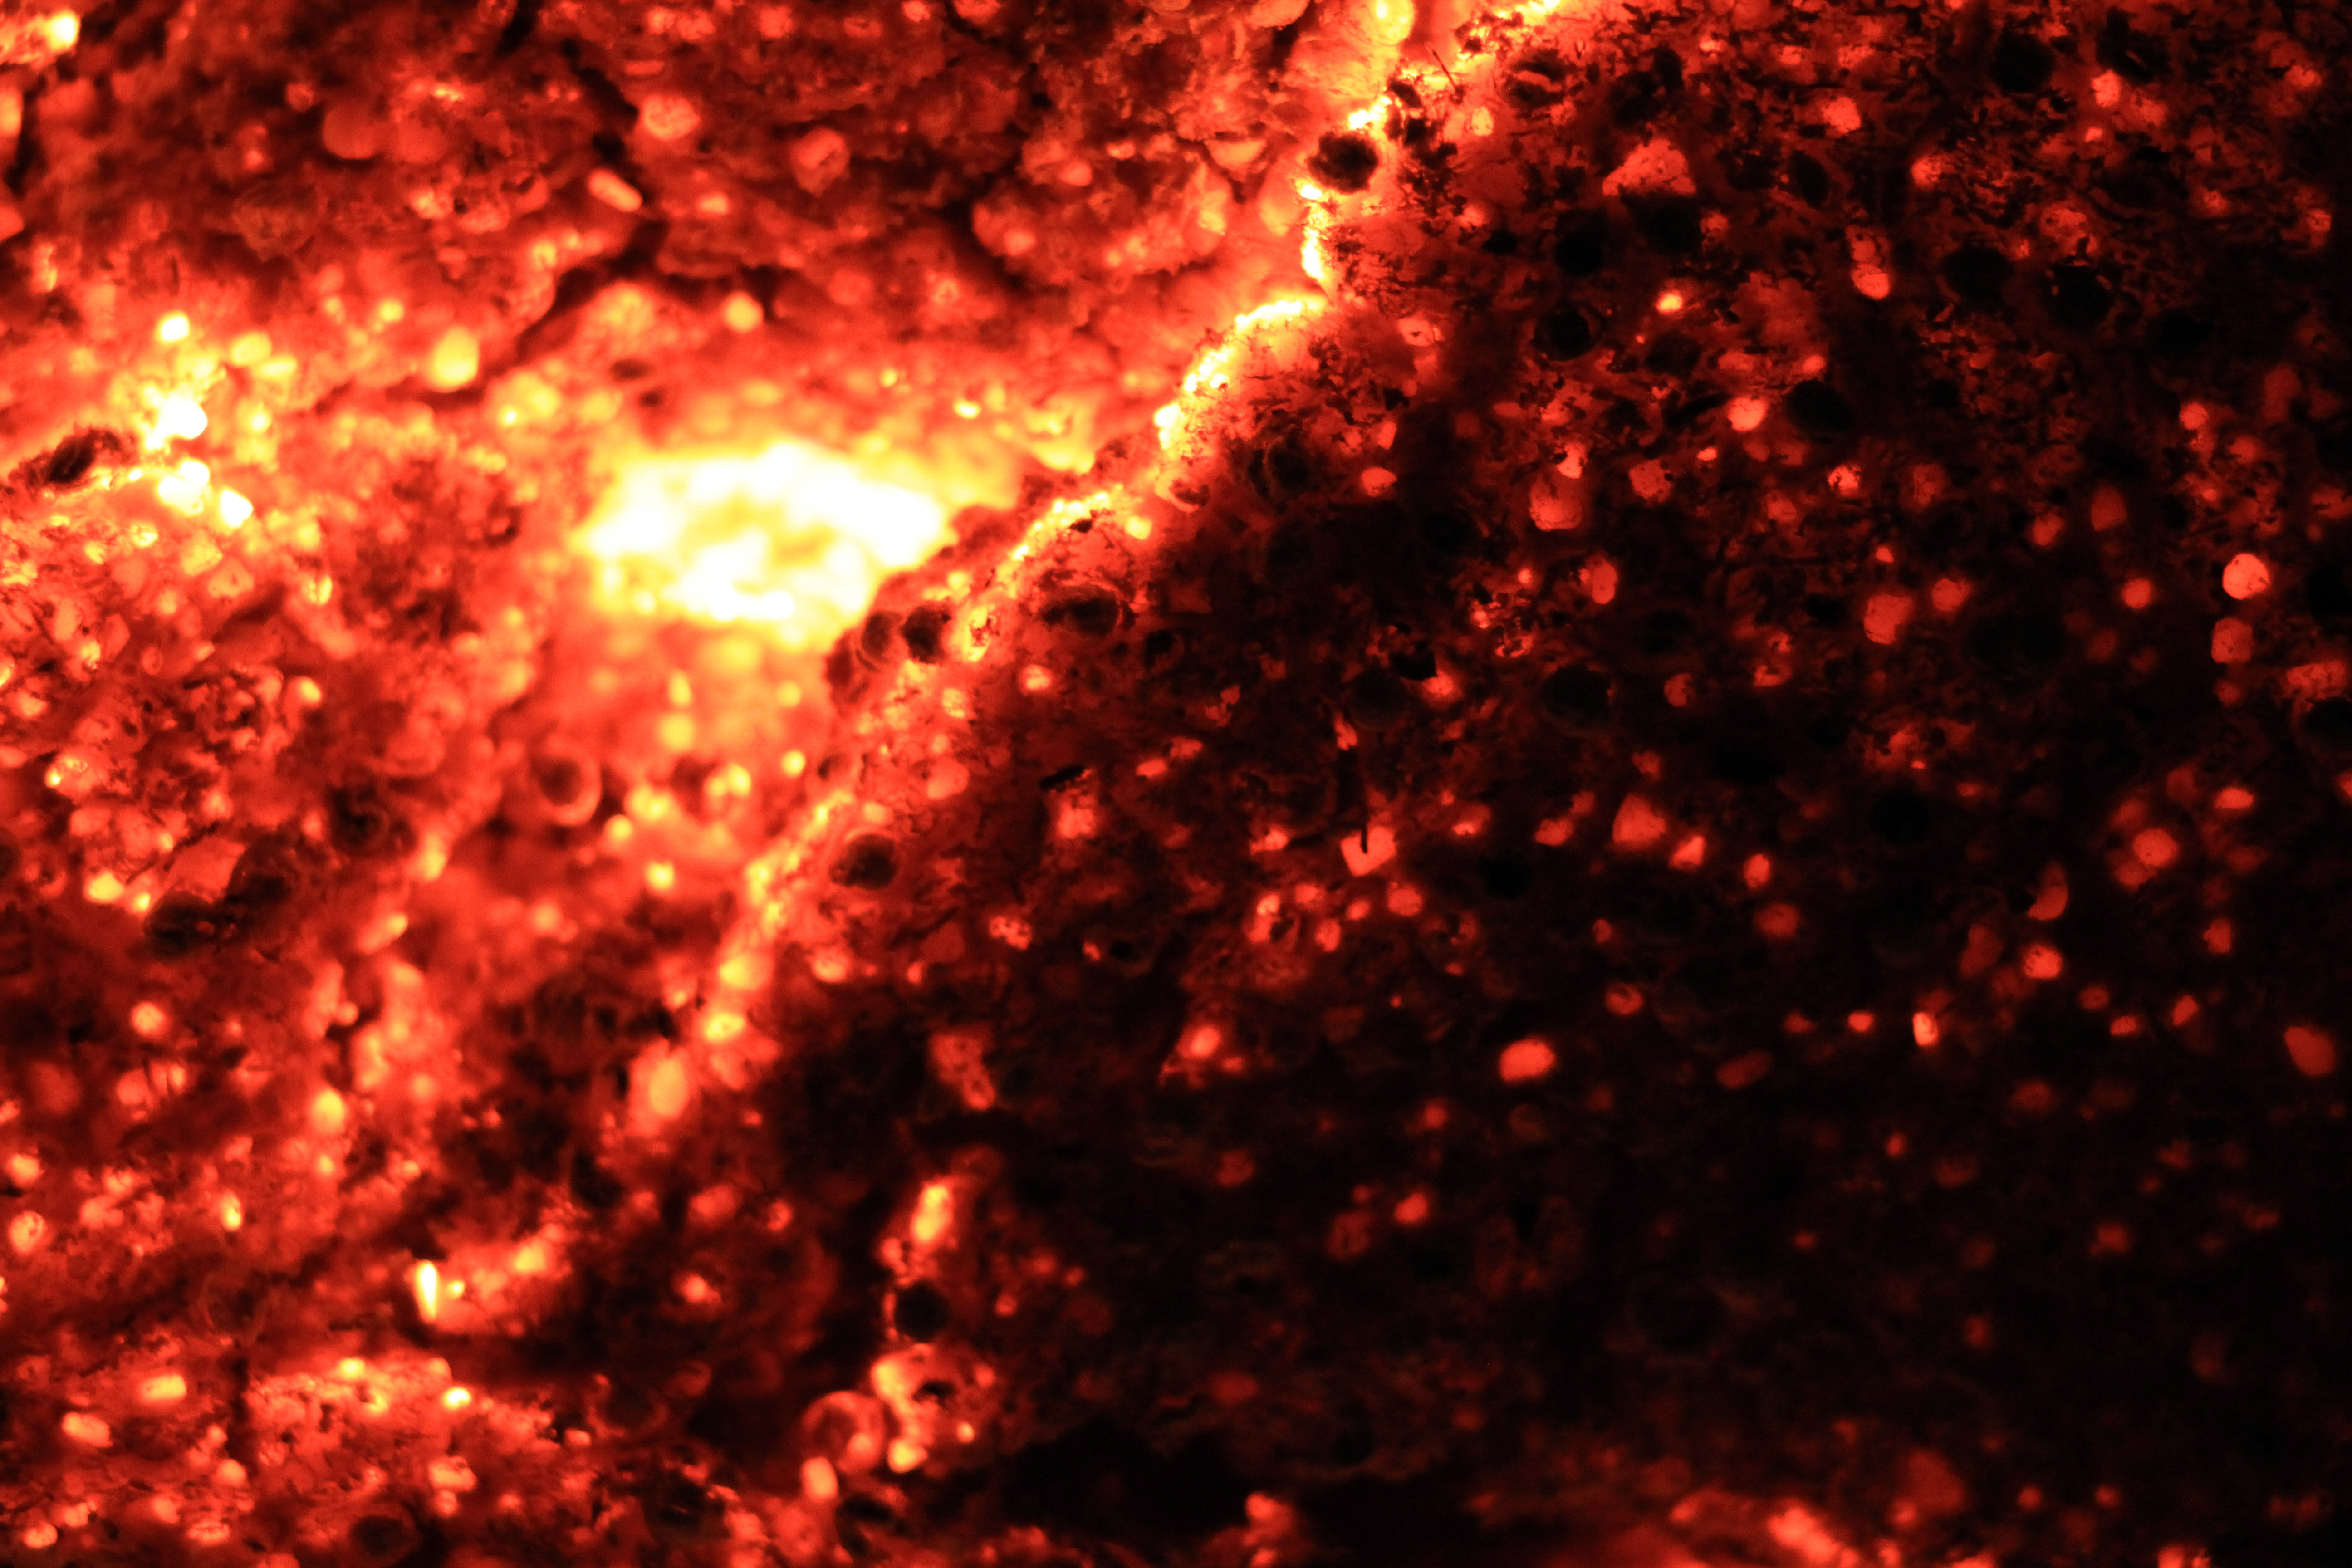 coal texture red hot fire place burn wallpaper - TextureX- Free and ...